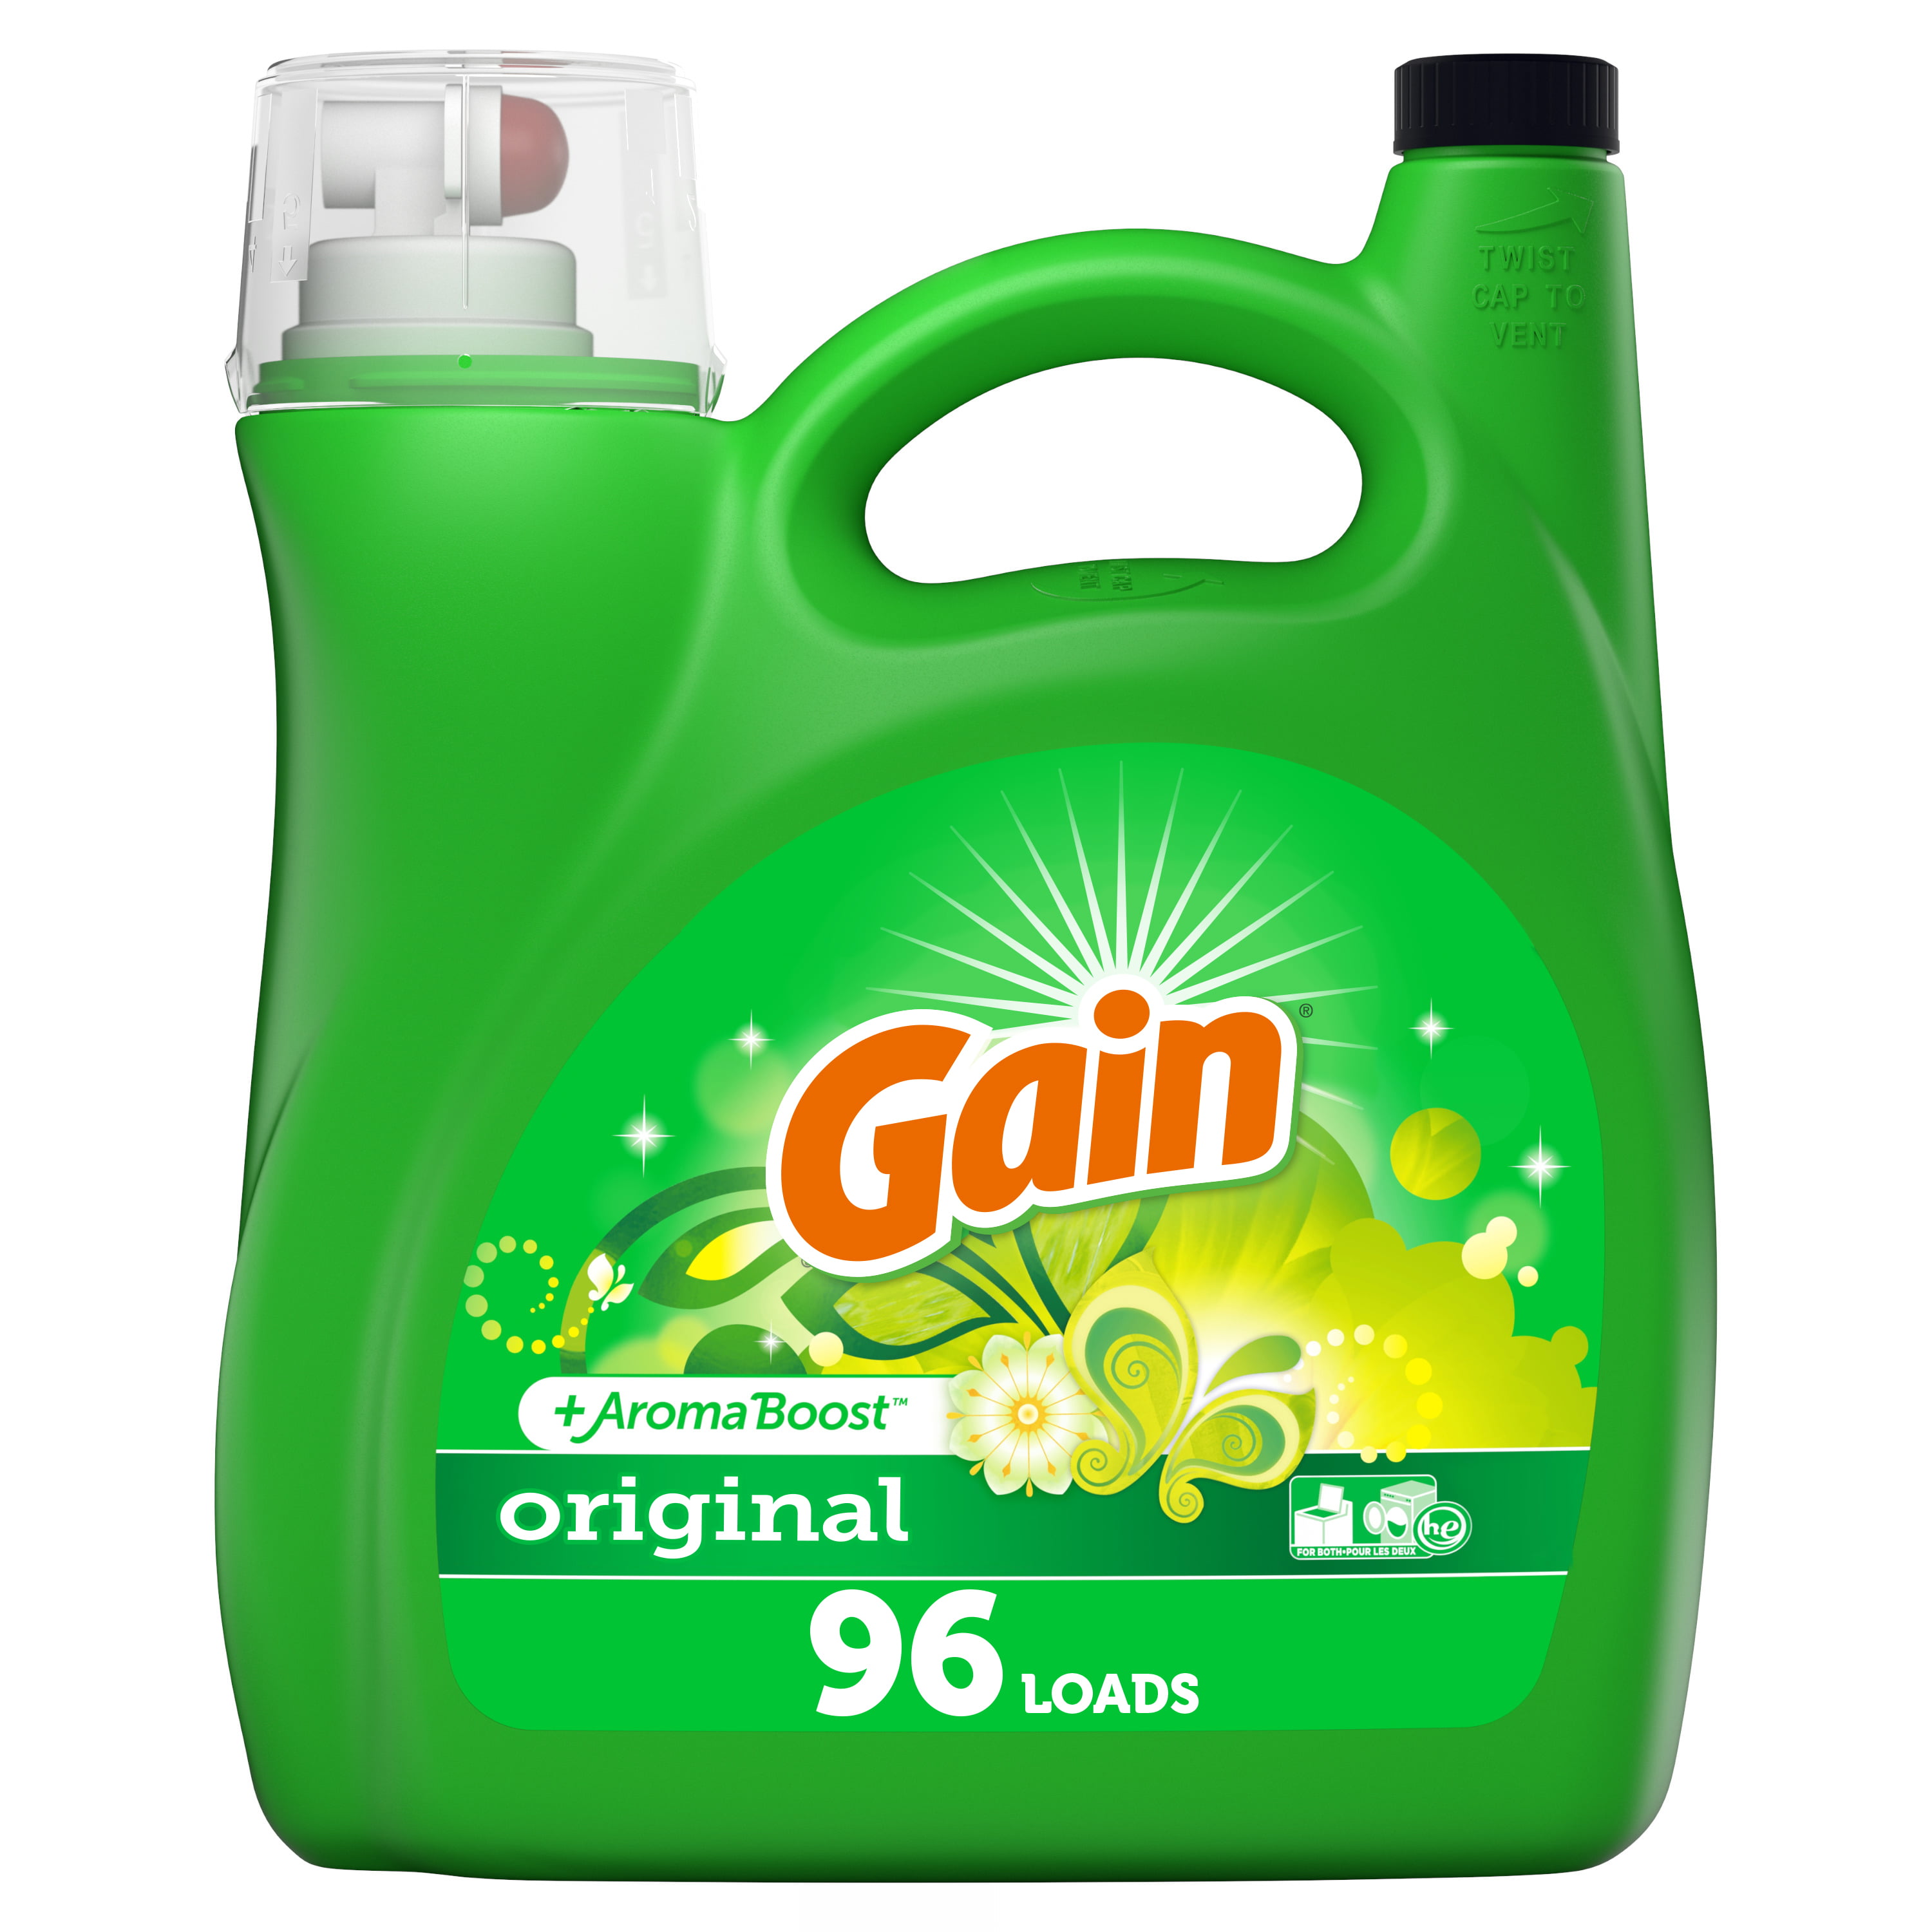 clothes detergent brands